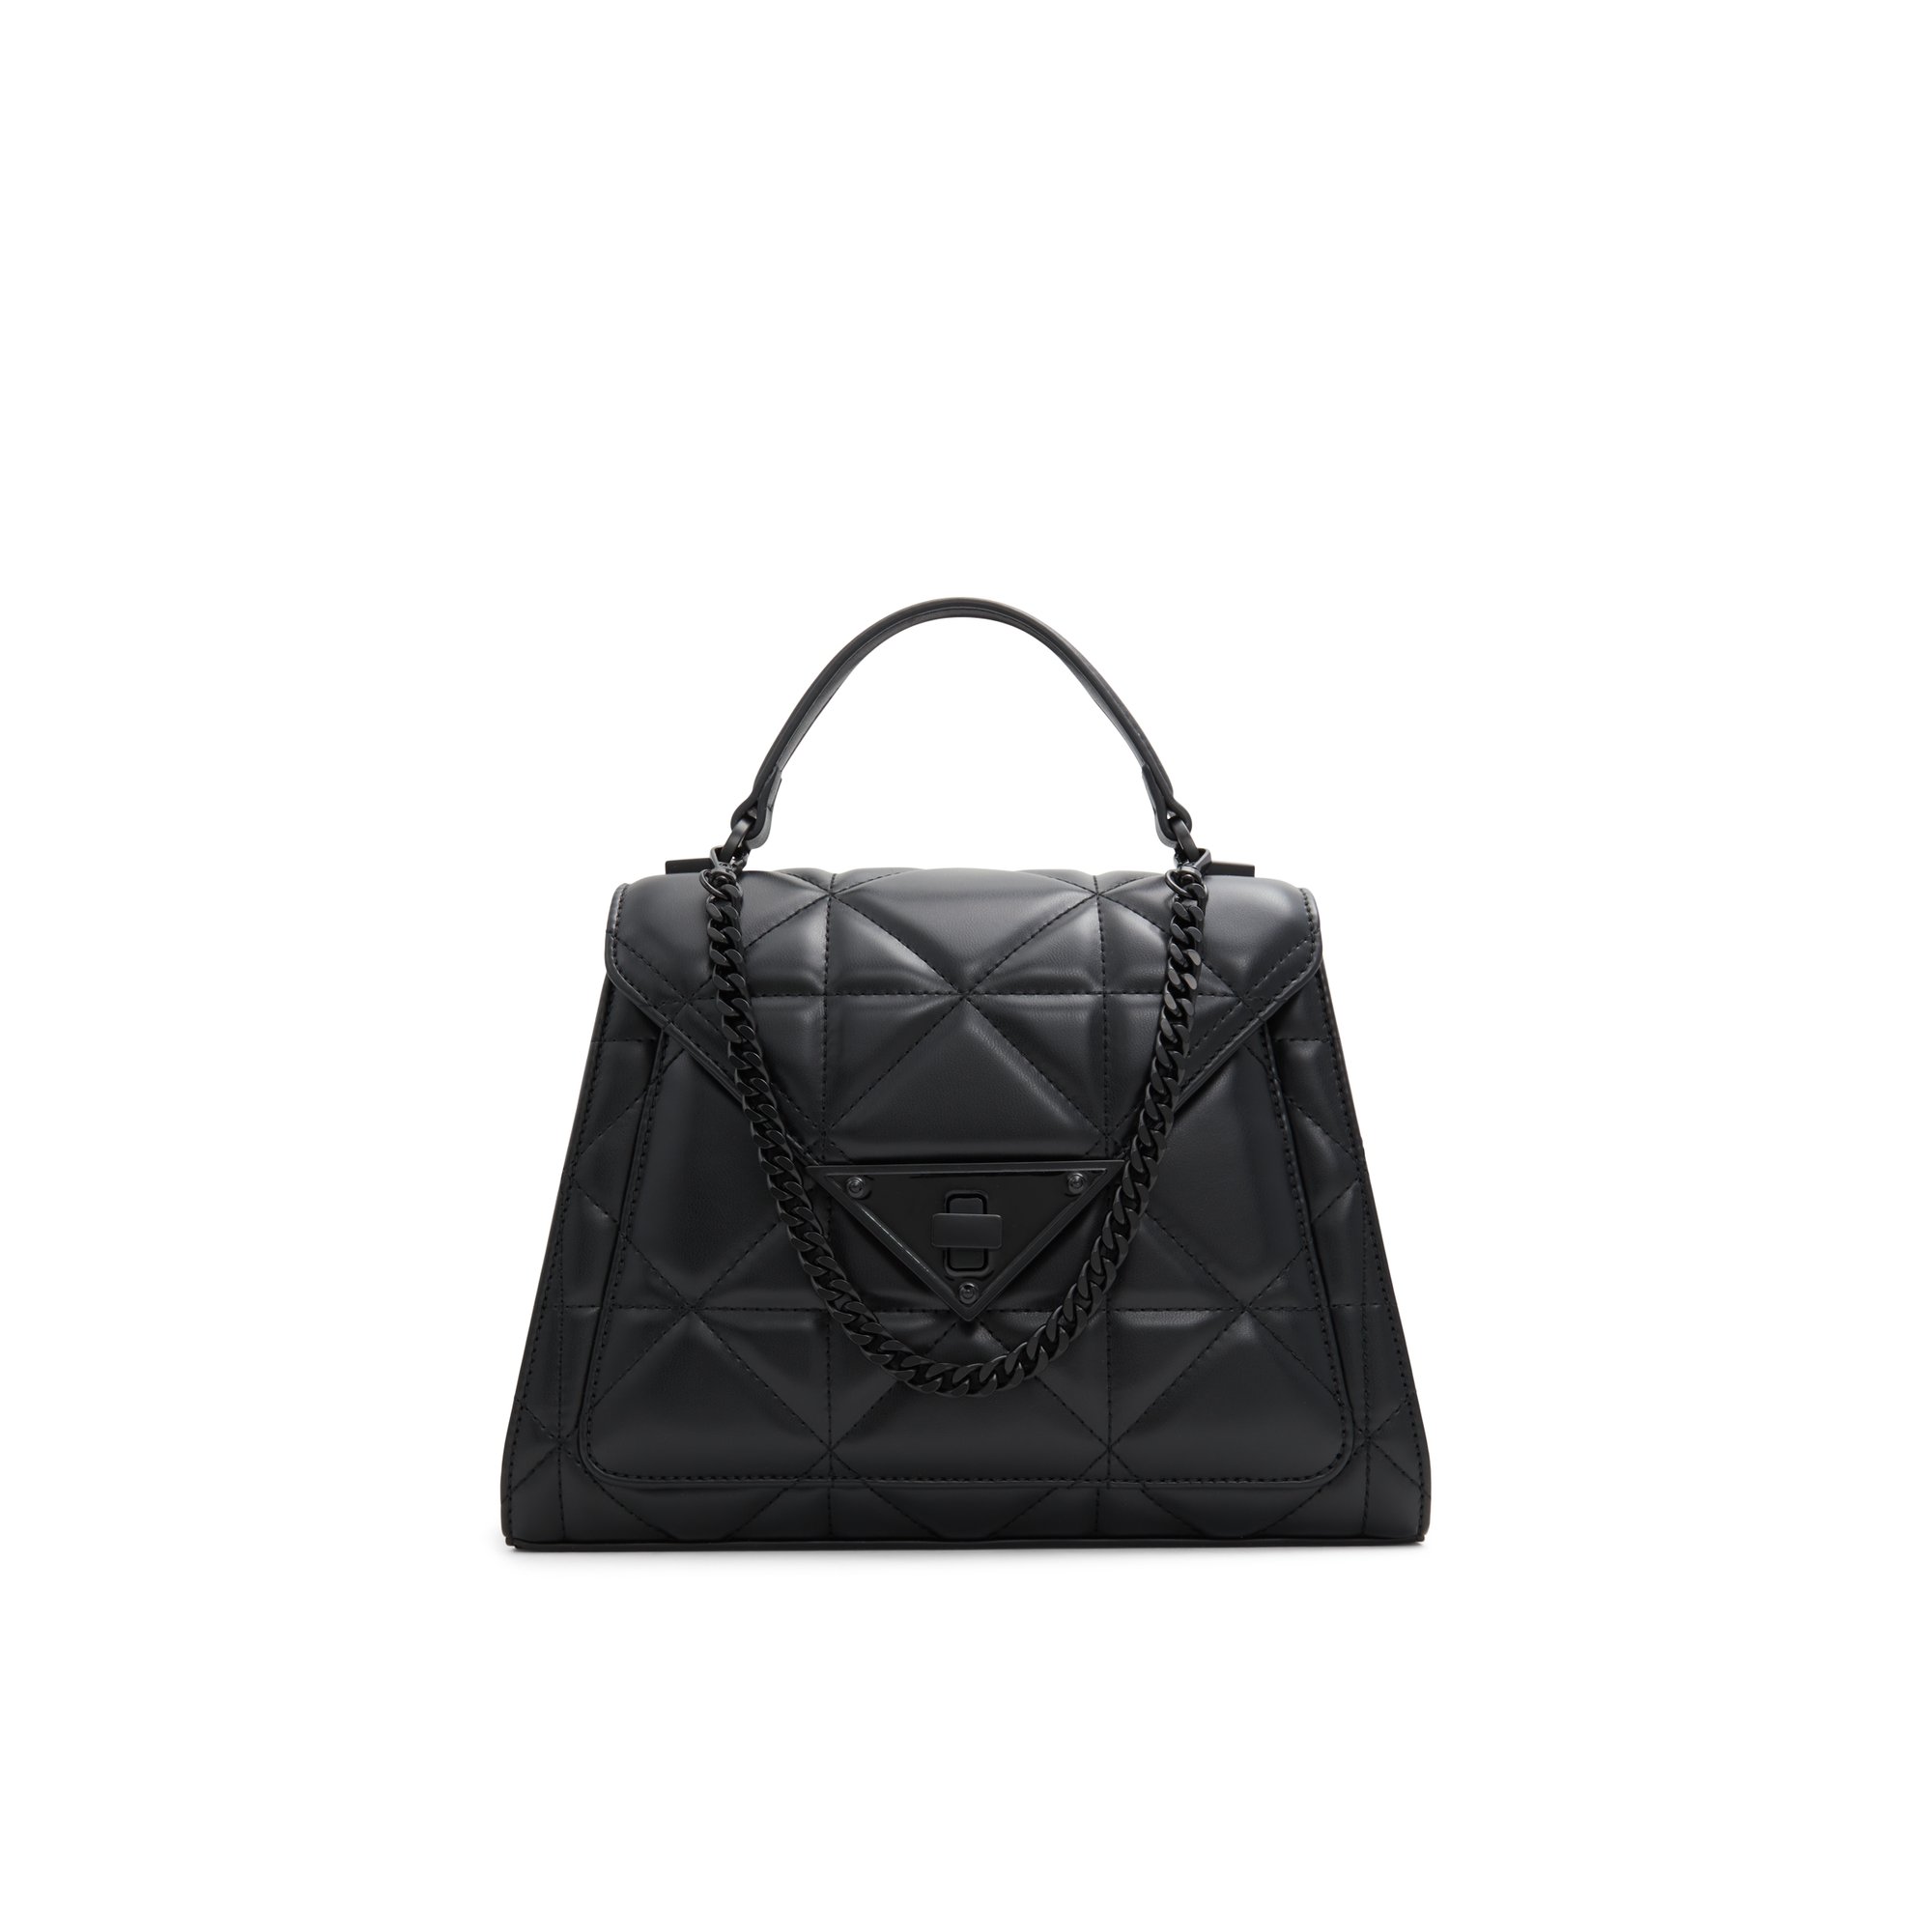 ALDO Verilinyyx - Women's Top Handle Handbag - Black